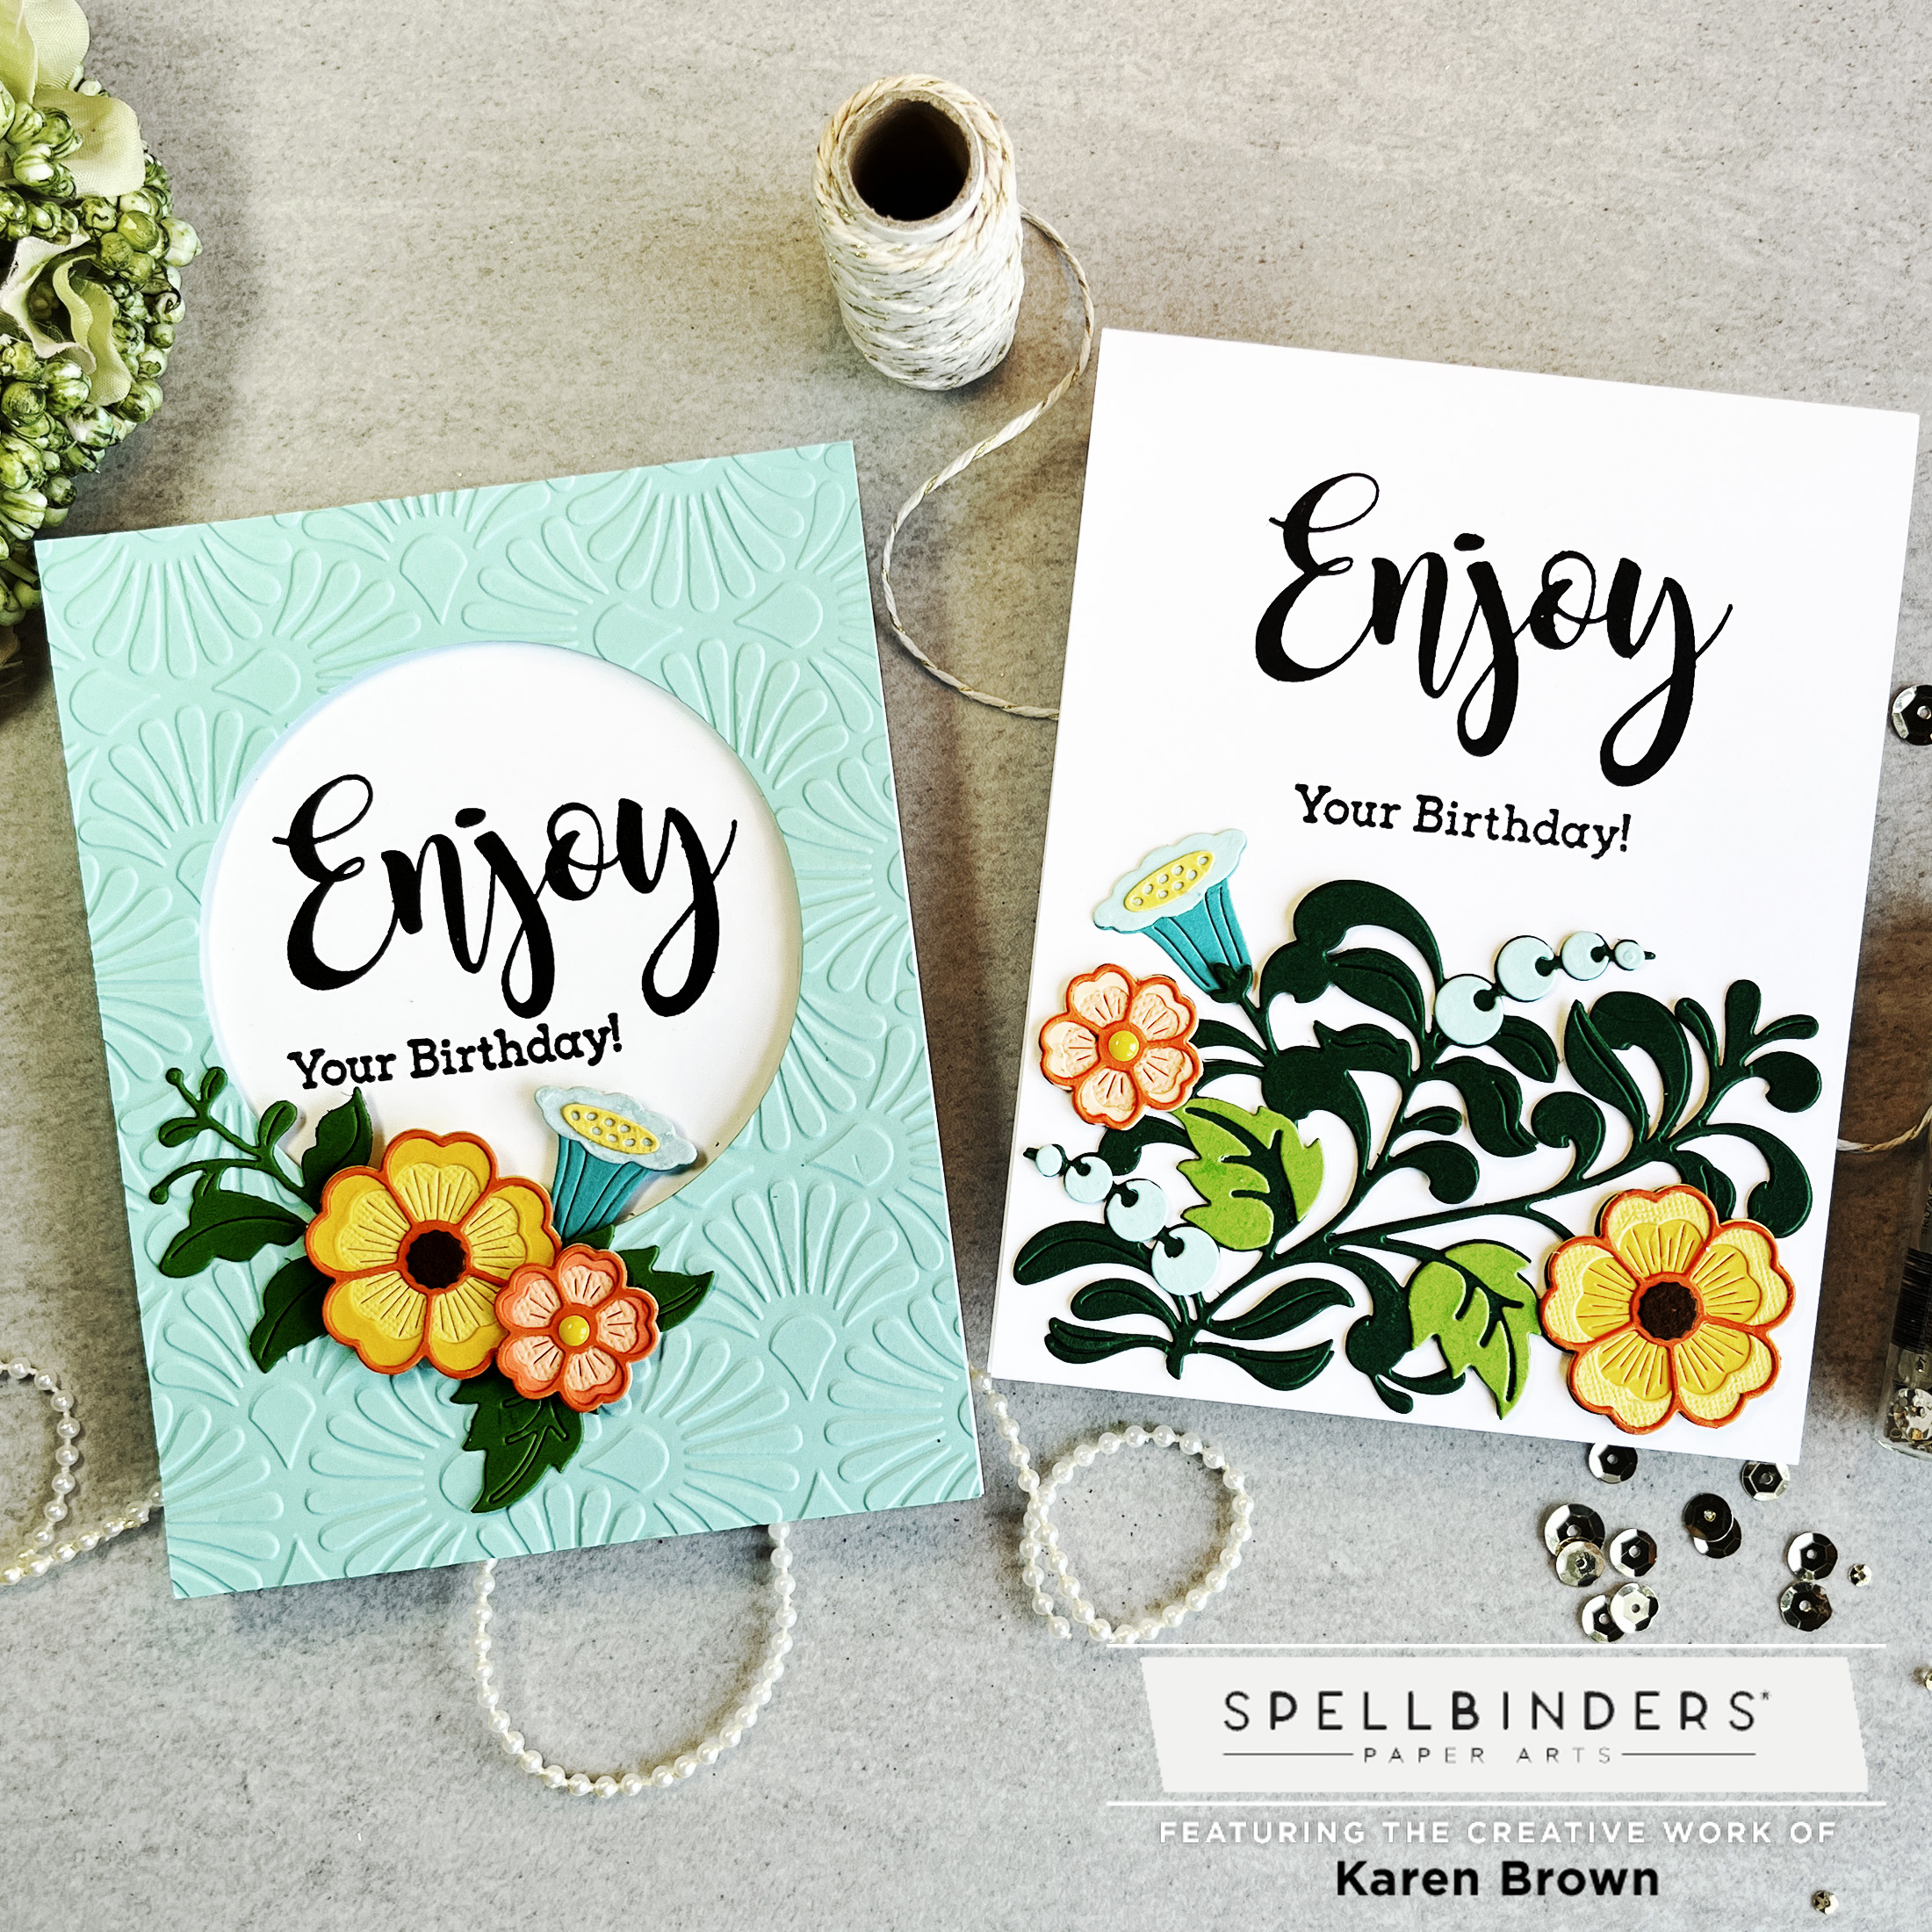 Spellbinders November 2022 Small Die of the Month Kit: Layered Floral Card Creator handmade card.